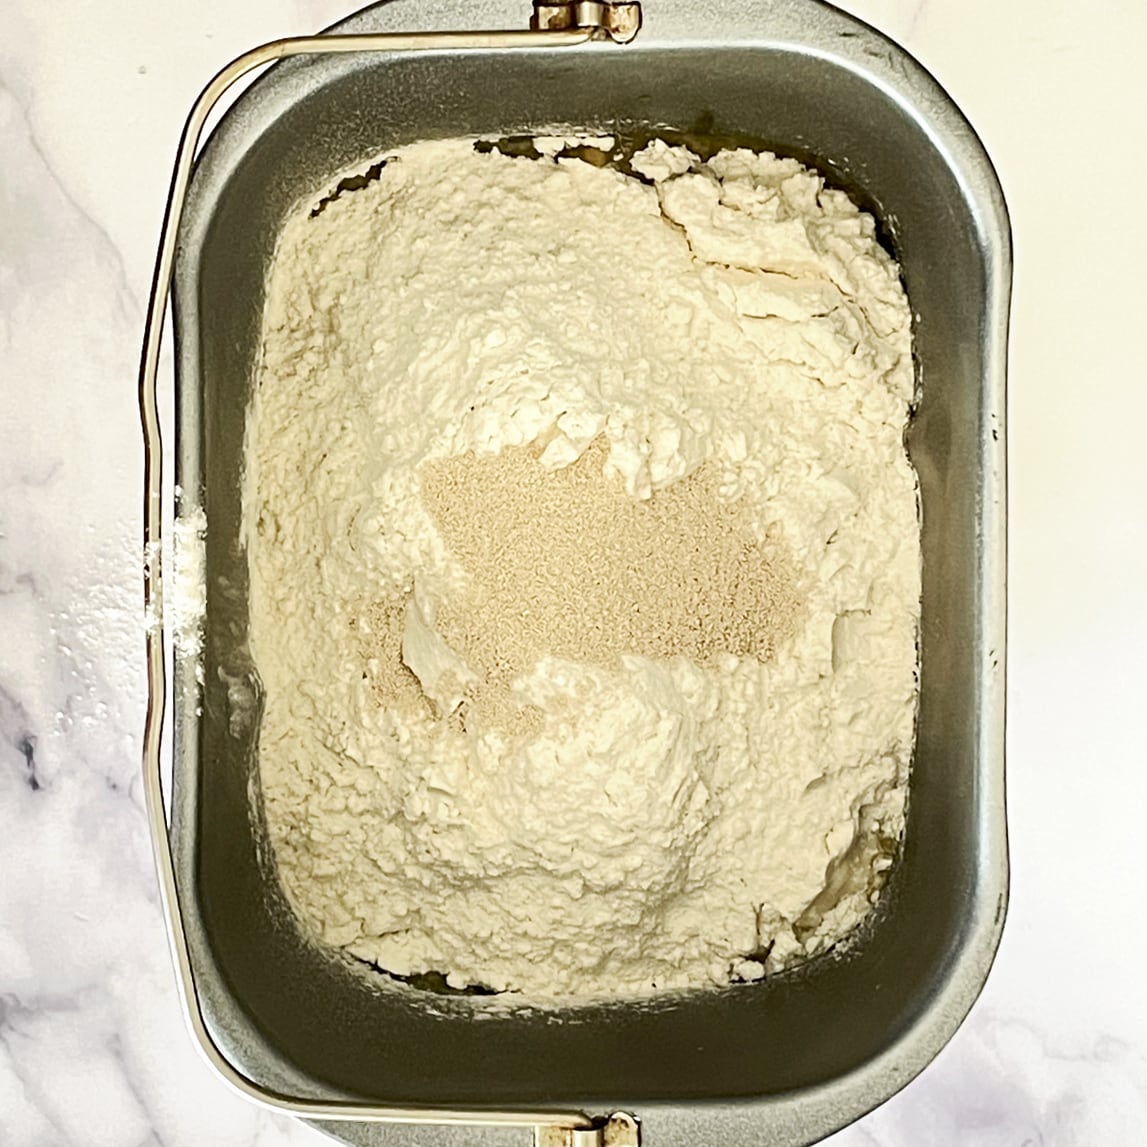 Milk bread ingredients in bread pan